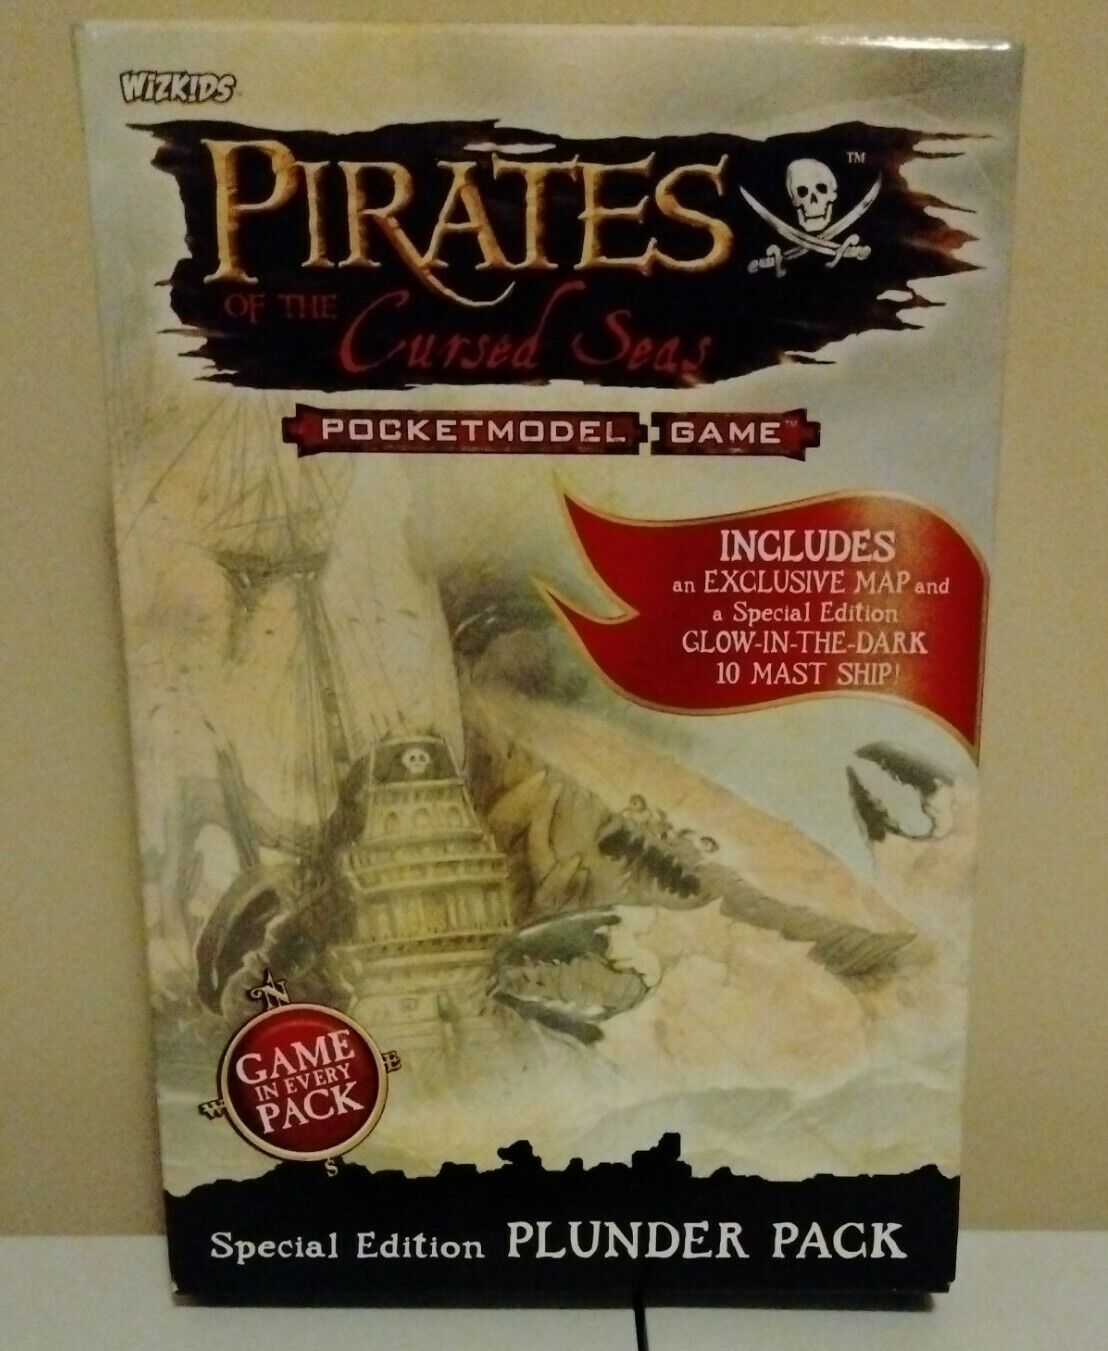 Wizkids Pirates CSG Pocketmodel: Plunder Pack w/ 10 Mast Delusion 2 Mega Packs